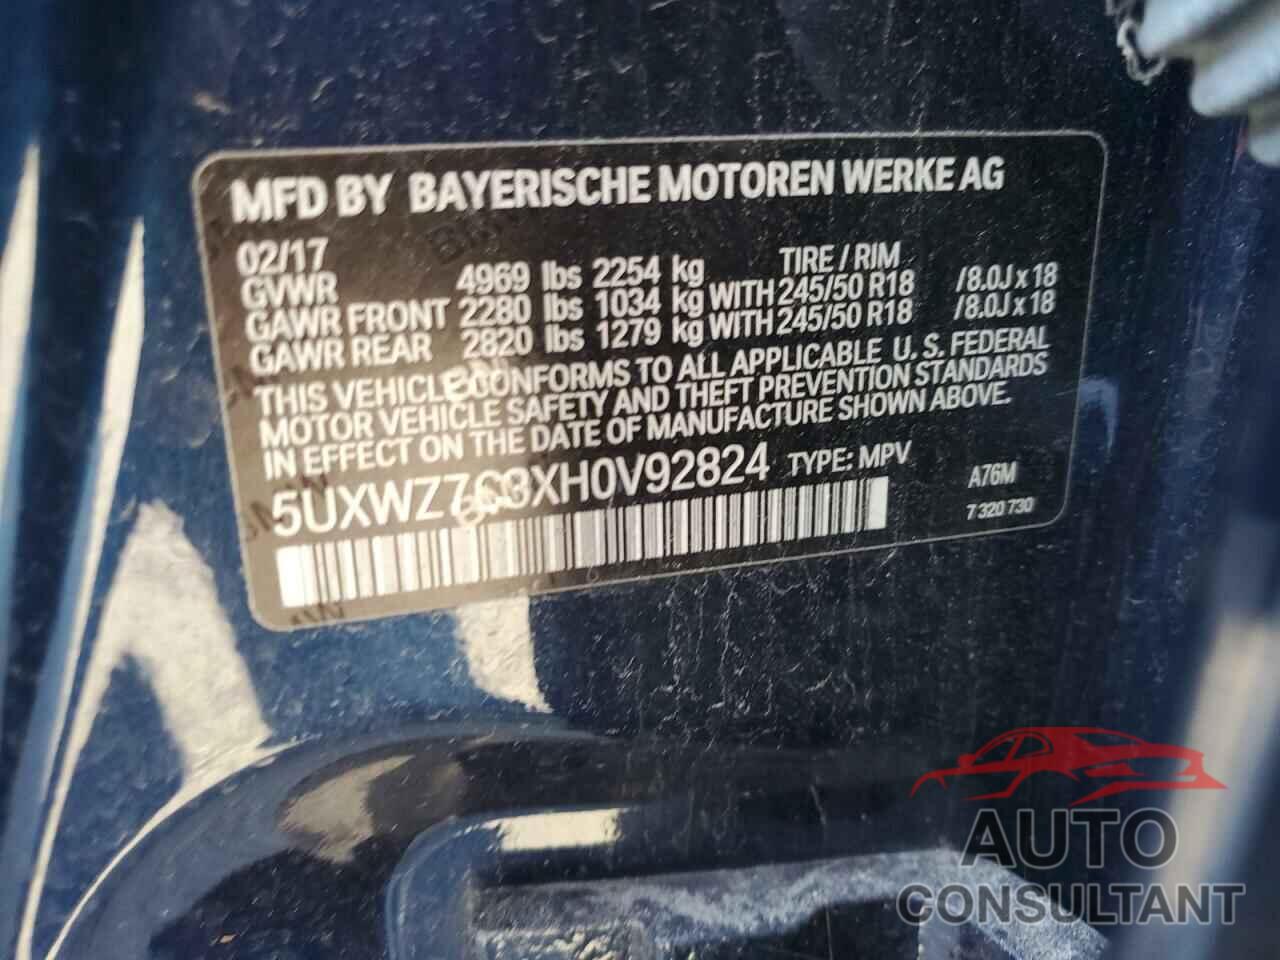 BMW X3 2017 - 5UXWZ7C3XH0V92824